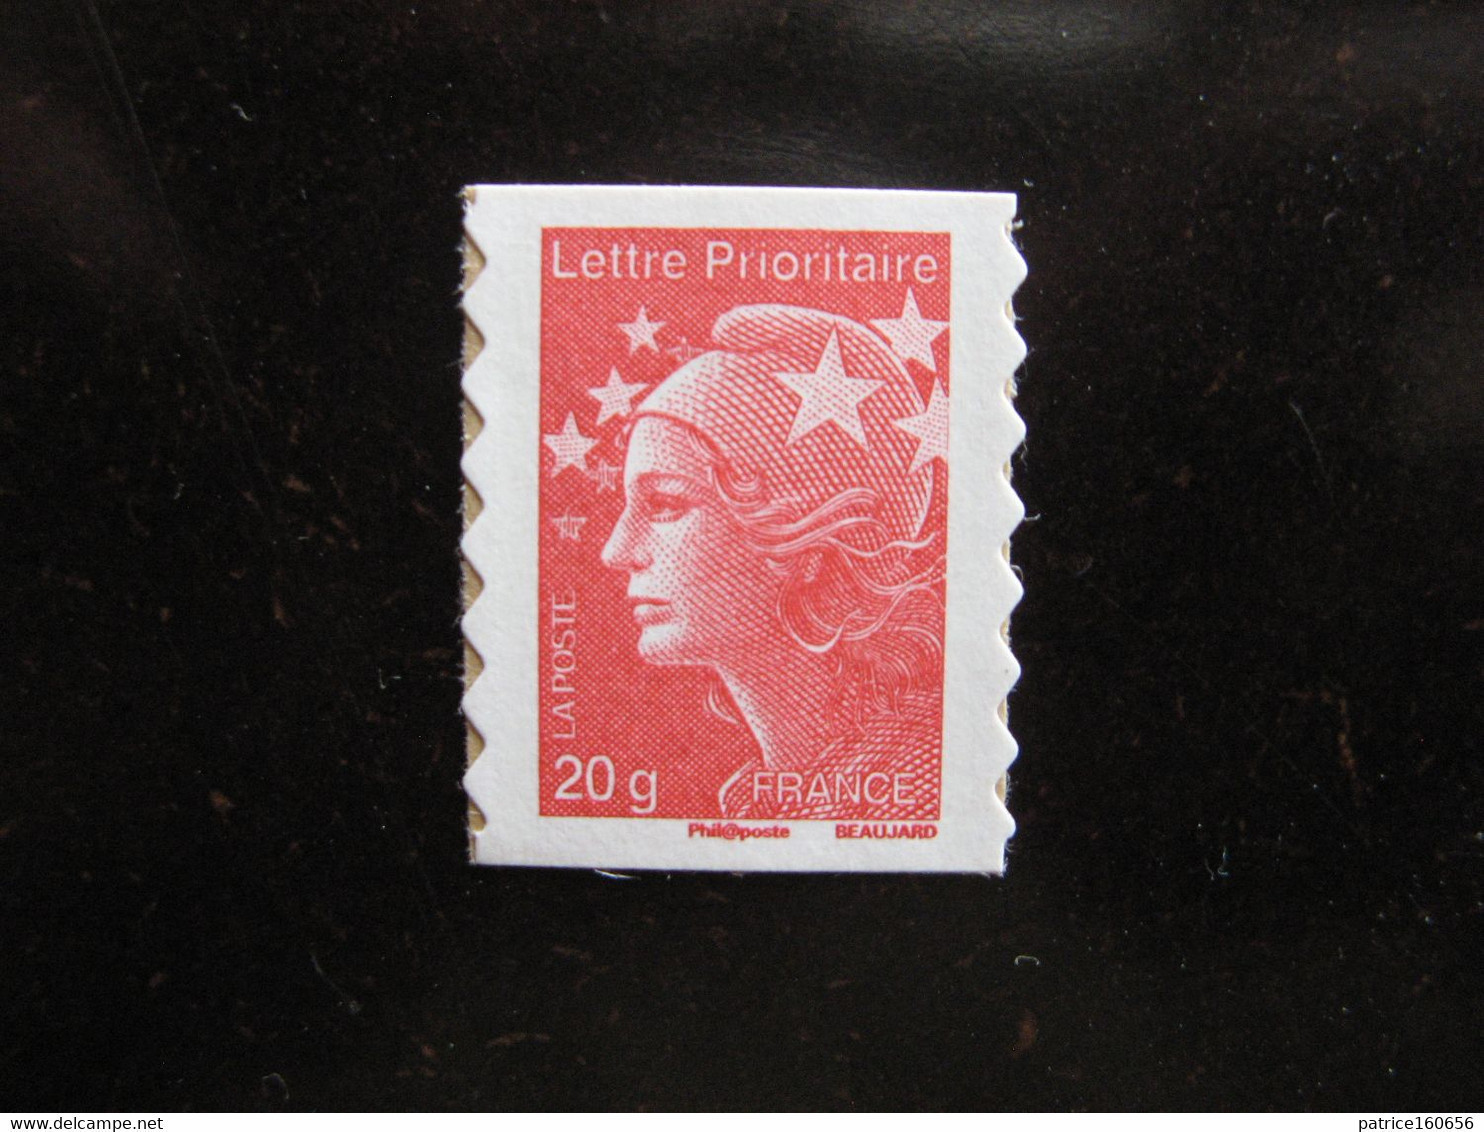 Autoadhésif : TB  N° 590a, De Carnet, Neuf XX. - Unused Stamps